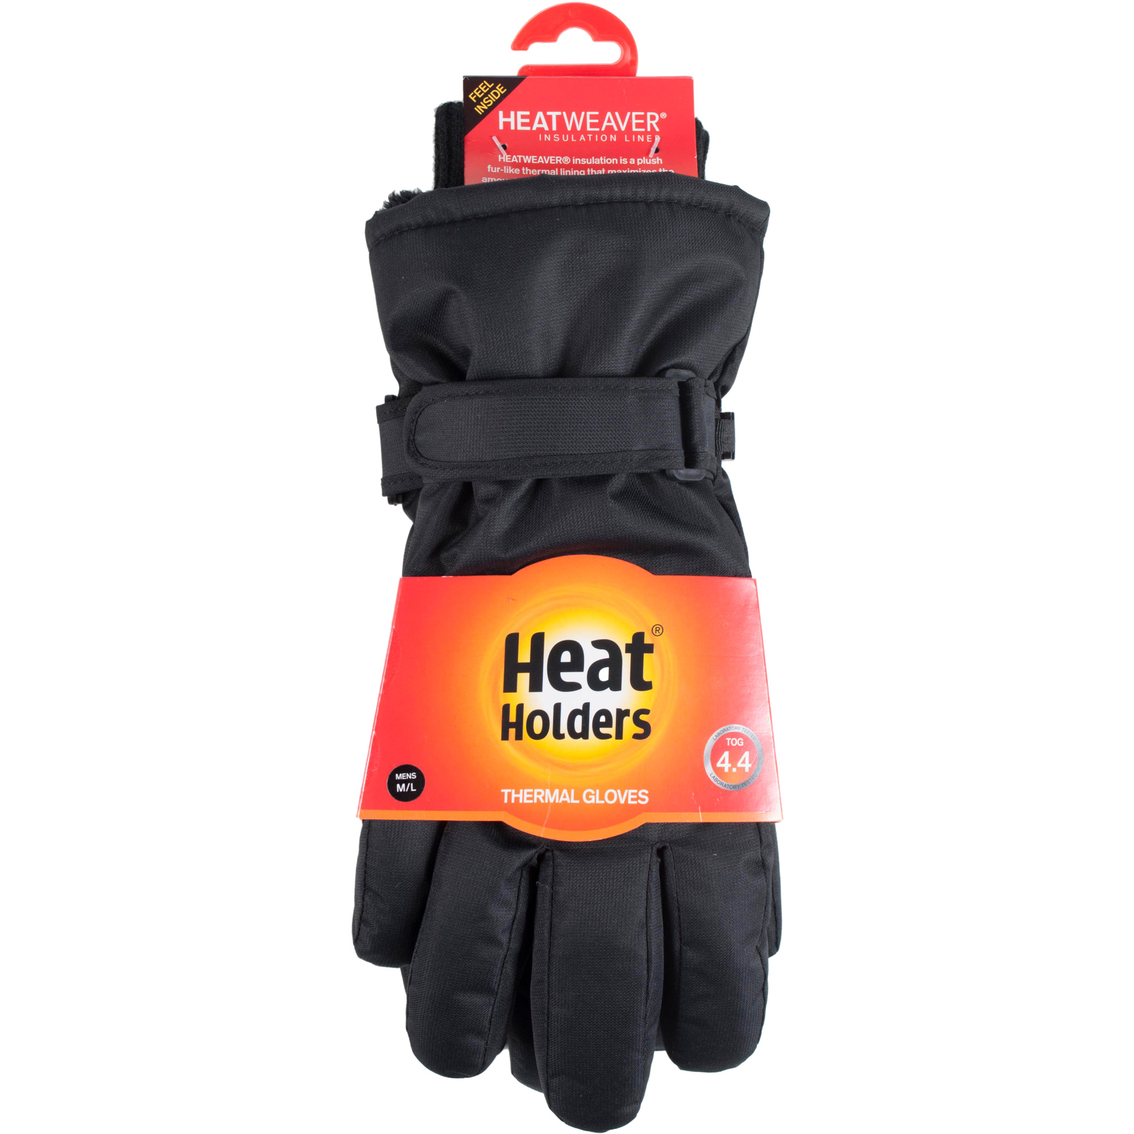 Heat Holder Performance Gloves - Image 2 of 3